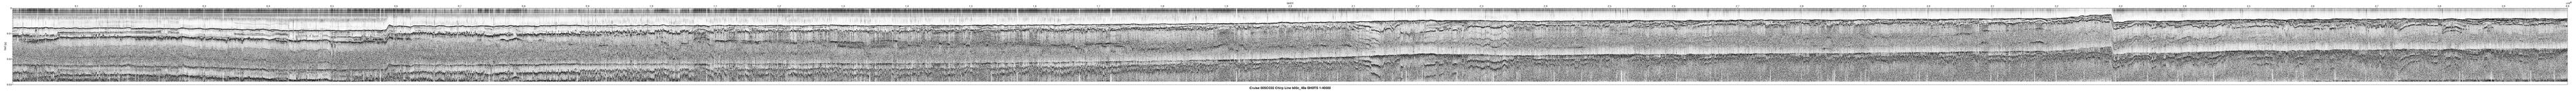 00SCC02 b00c_48a seismic profile image